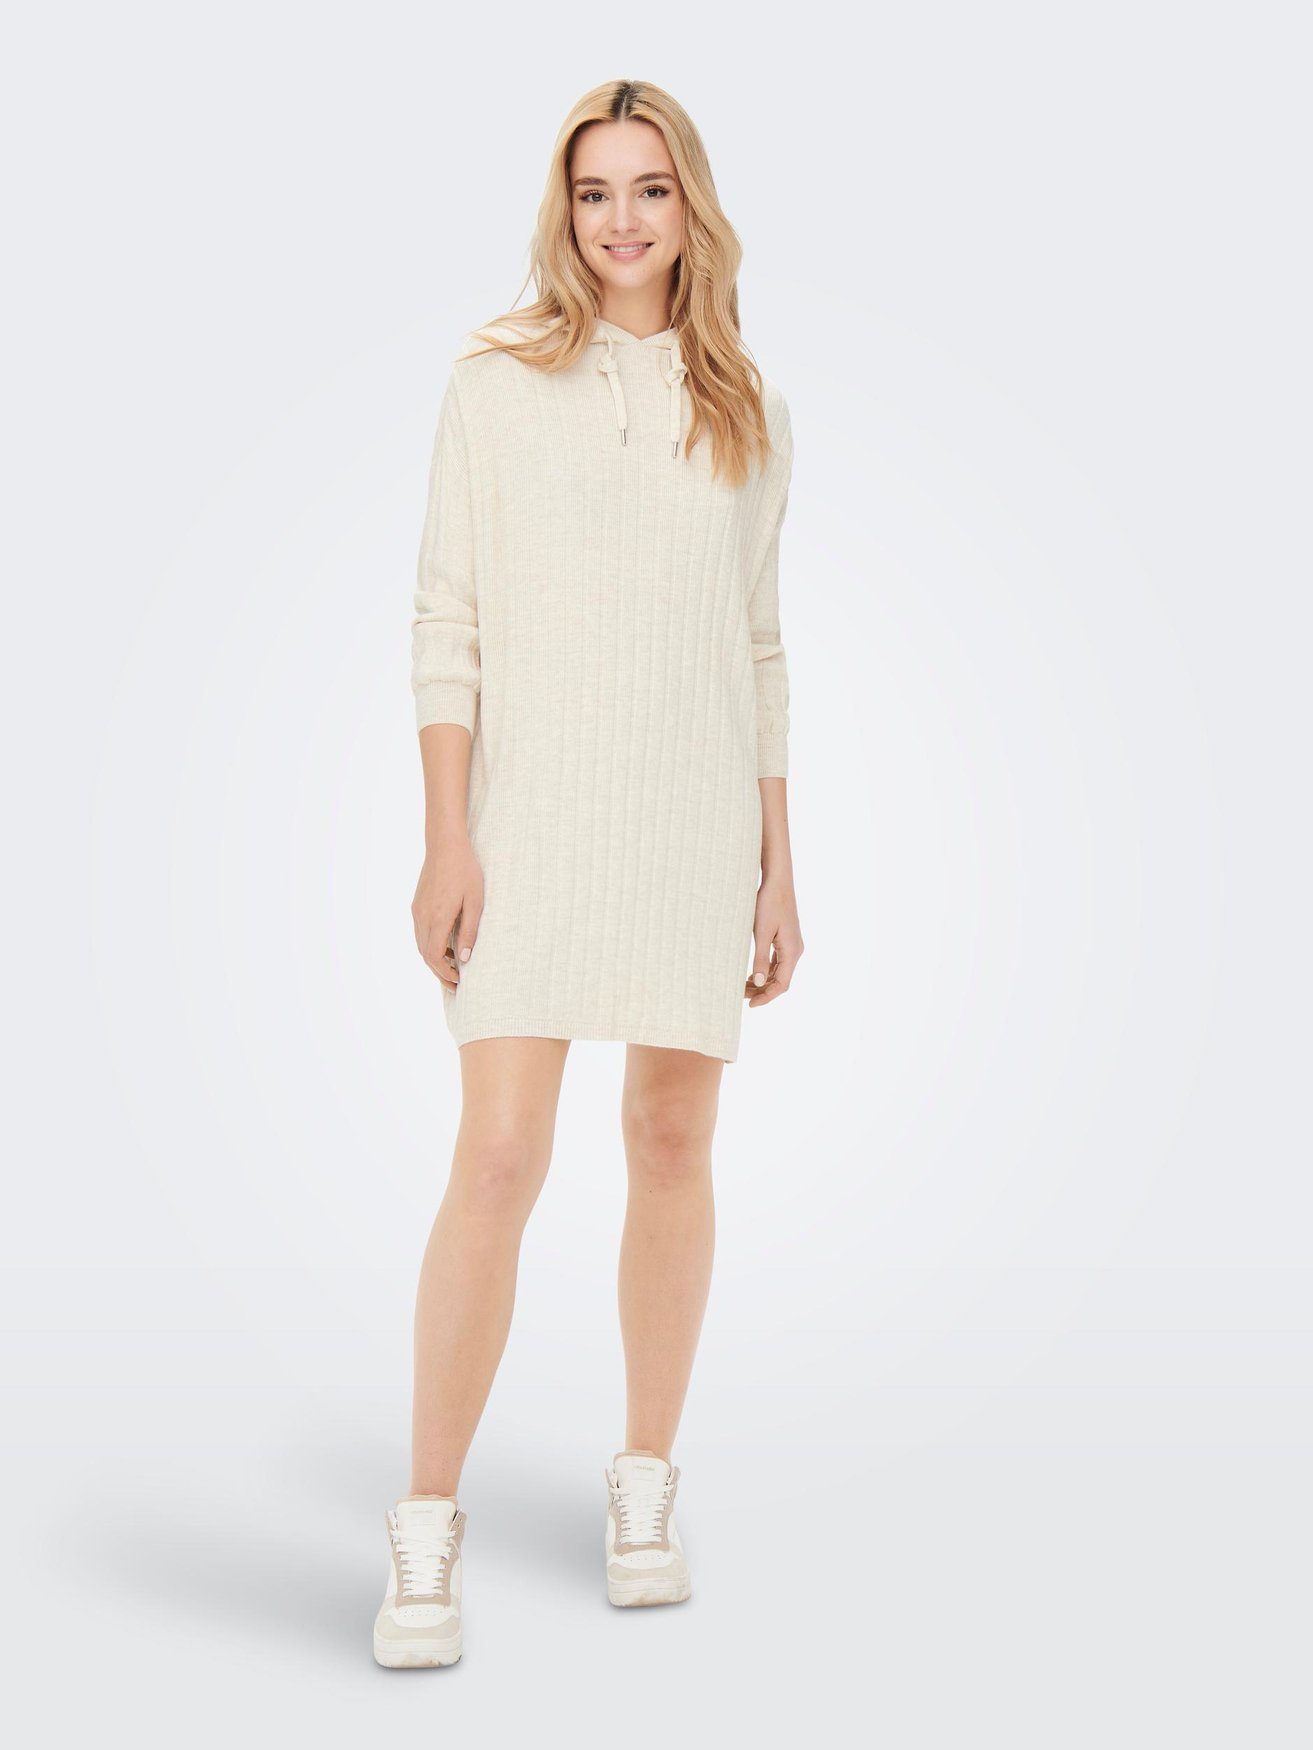 (20) Mini Shirtkleid 6157 ONLTESSA (lang) in ONLY Hoodie Beige Dress offwhite Pullover Strick Kleid